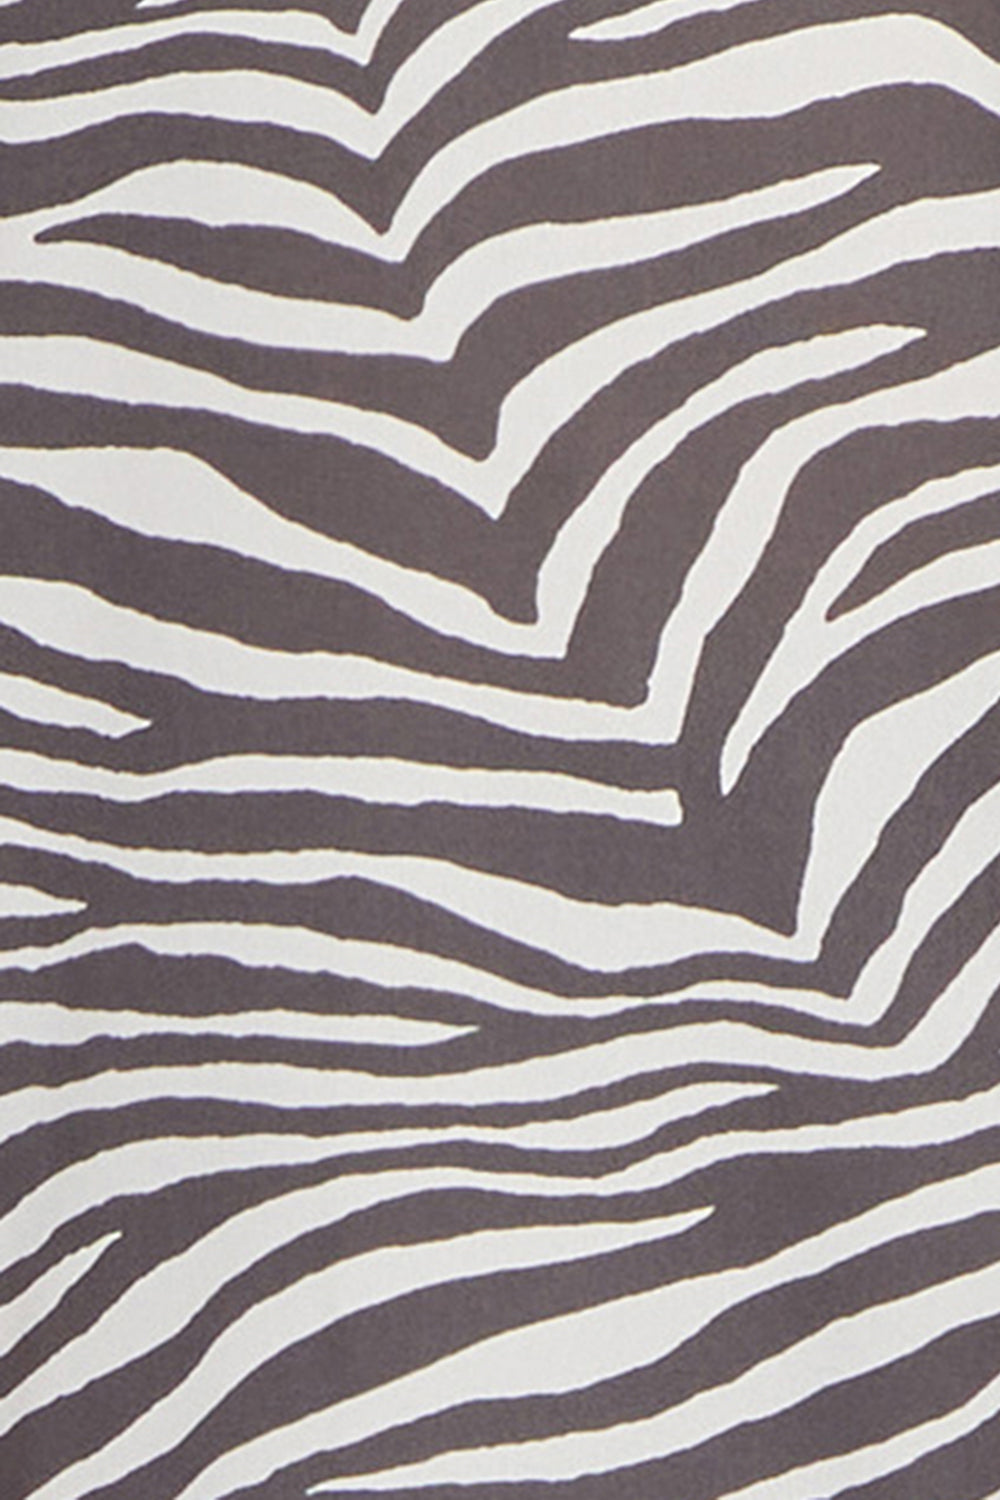 NYDJ Sleeveless Pintuck Blouse In Plus Size  - Metro Zebra